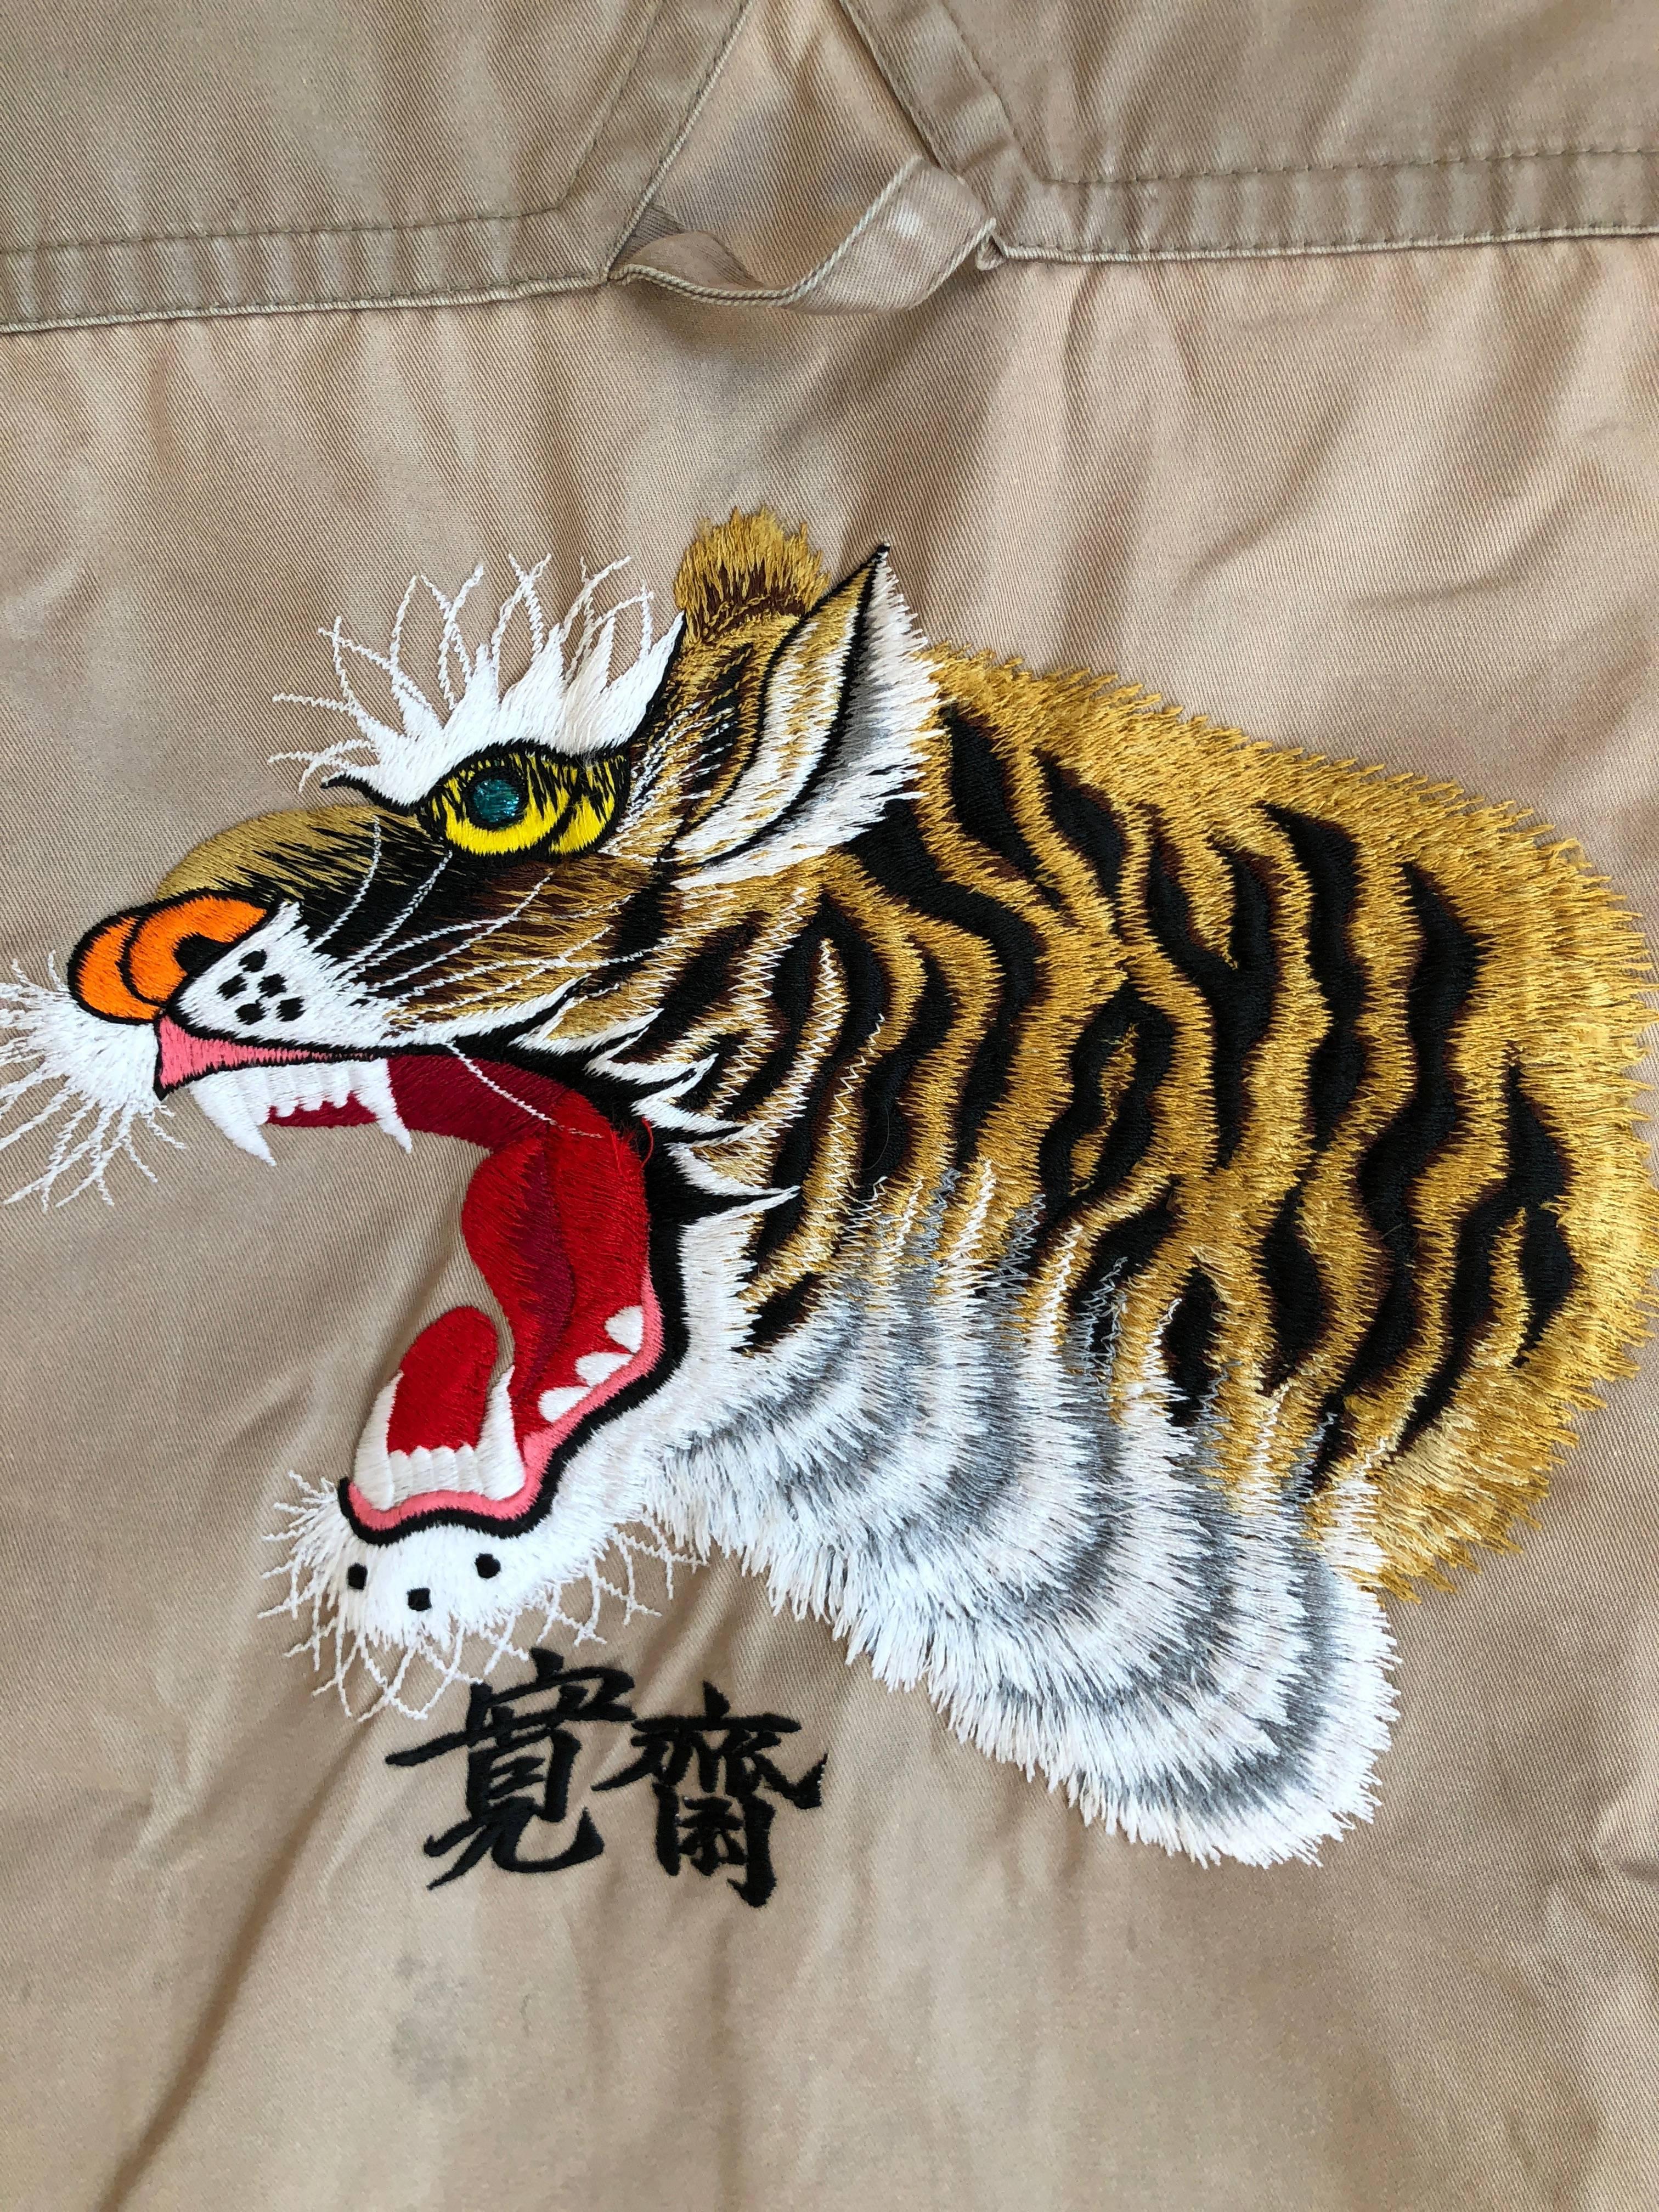 Kansai Yamamoto Khaki Men's Military Shirt with Tiger Embroidery.
Join the Kansai Army.
	A predecessor of designers like Issey Miyake, Yohji Yamamoto, Kenzo Takada, and Rei Kawakubo, Kansai Yamamoto was the first Japanese designer to show in London